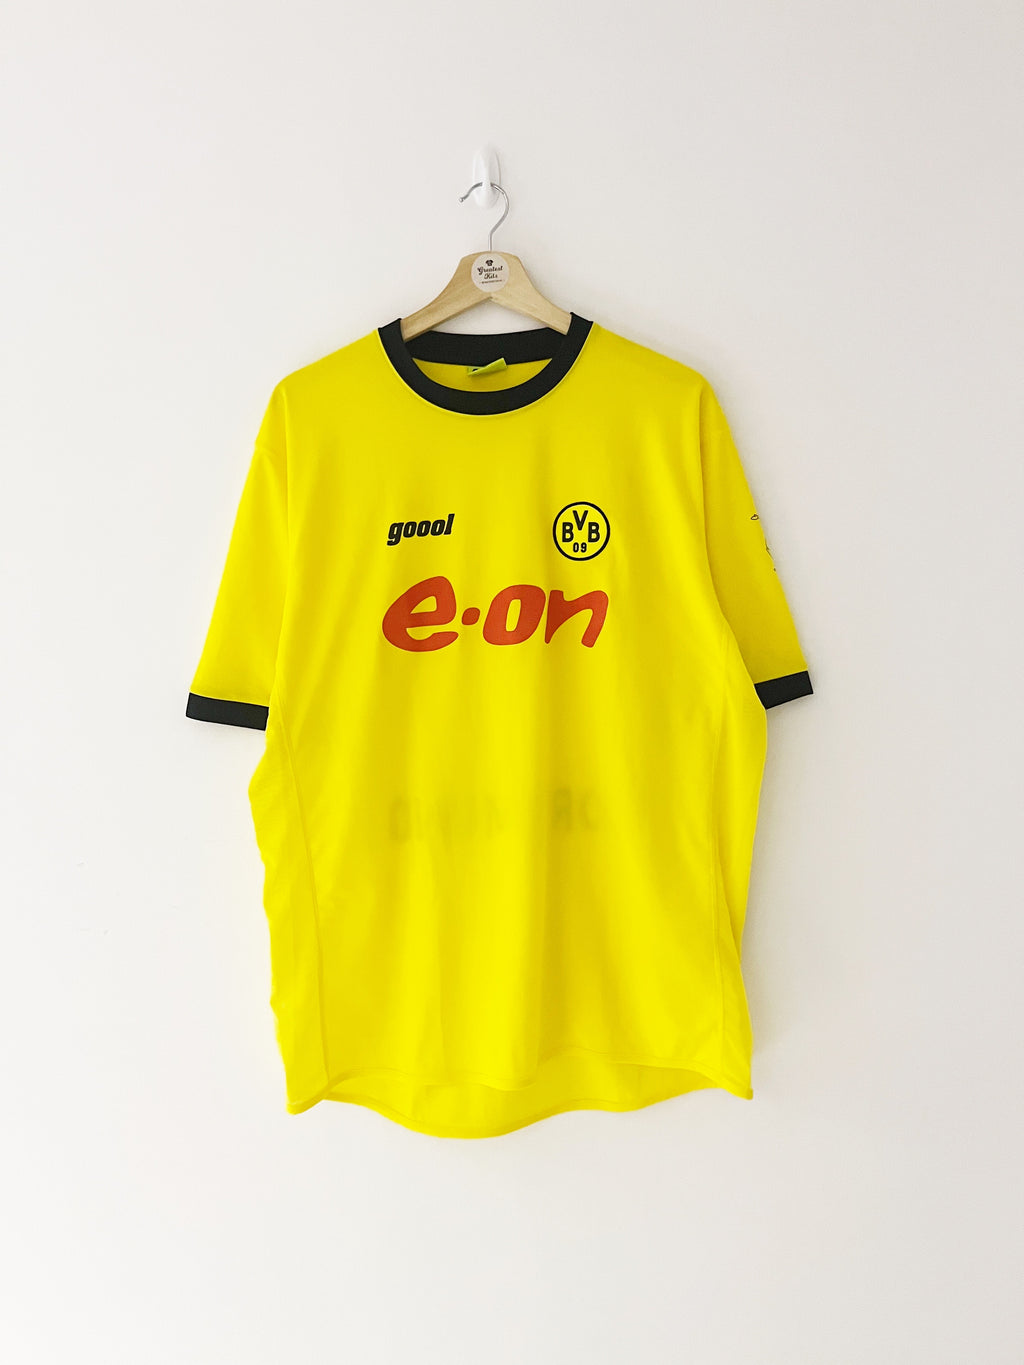 Maillot domicile du Borussia Dortmund 2003/04 (L) 9/10 